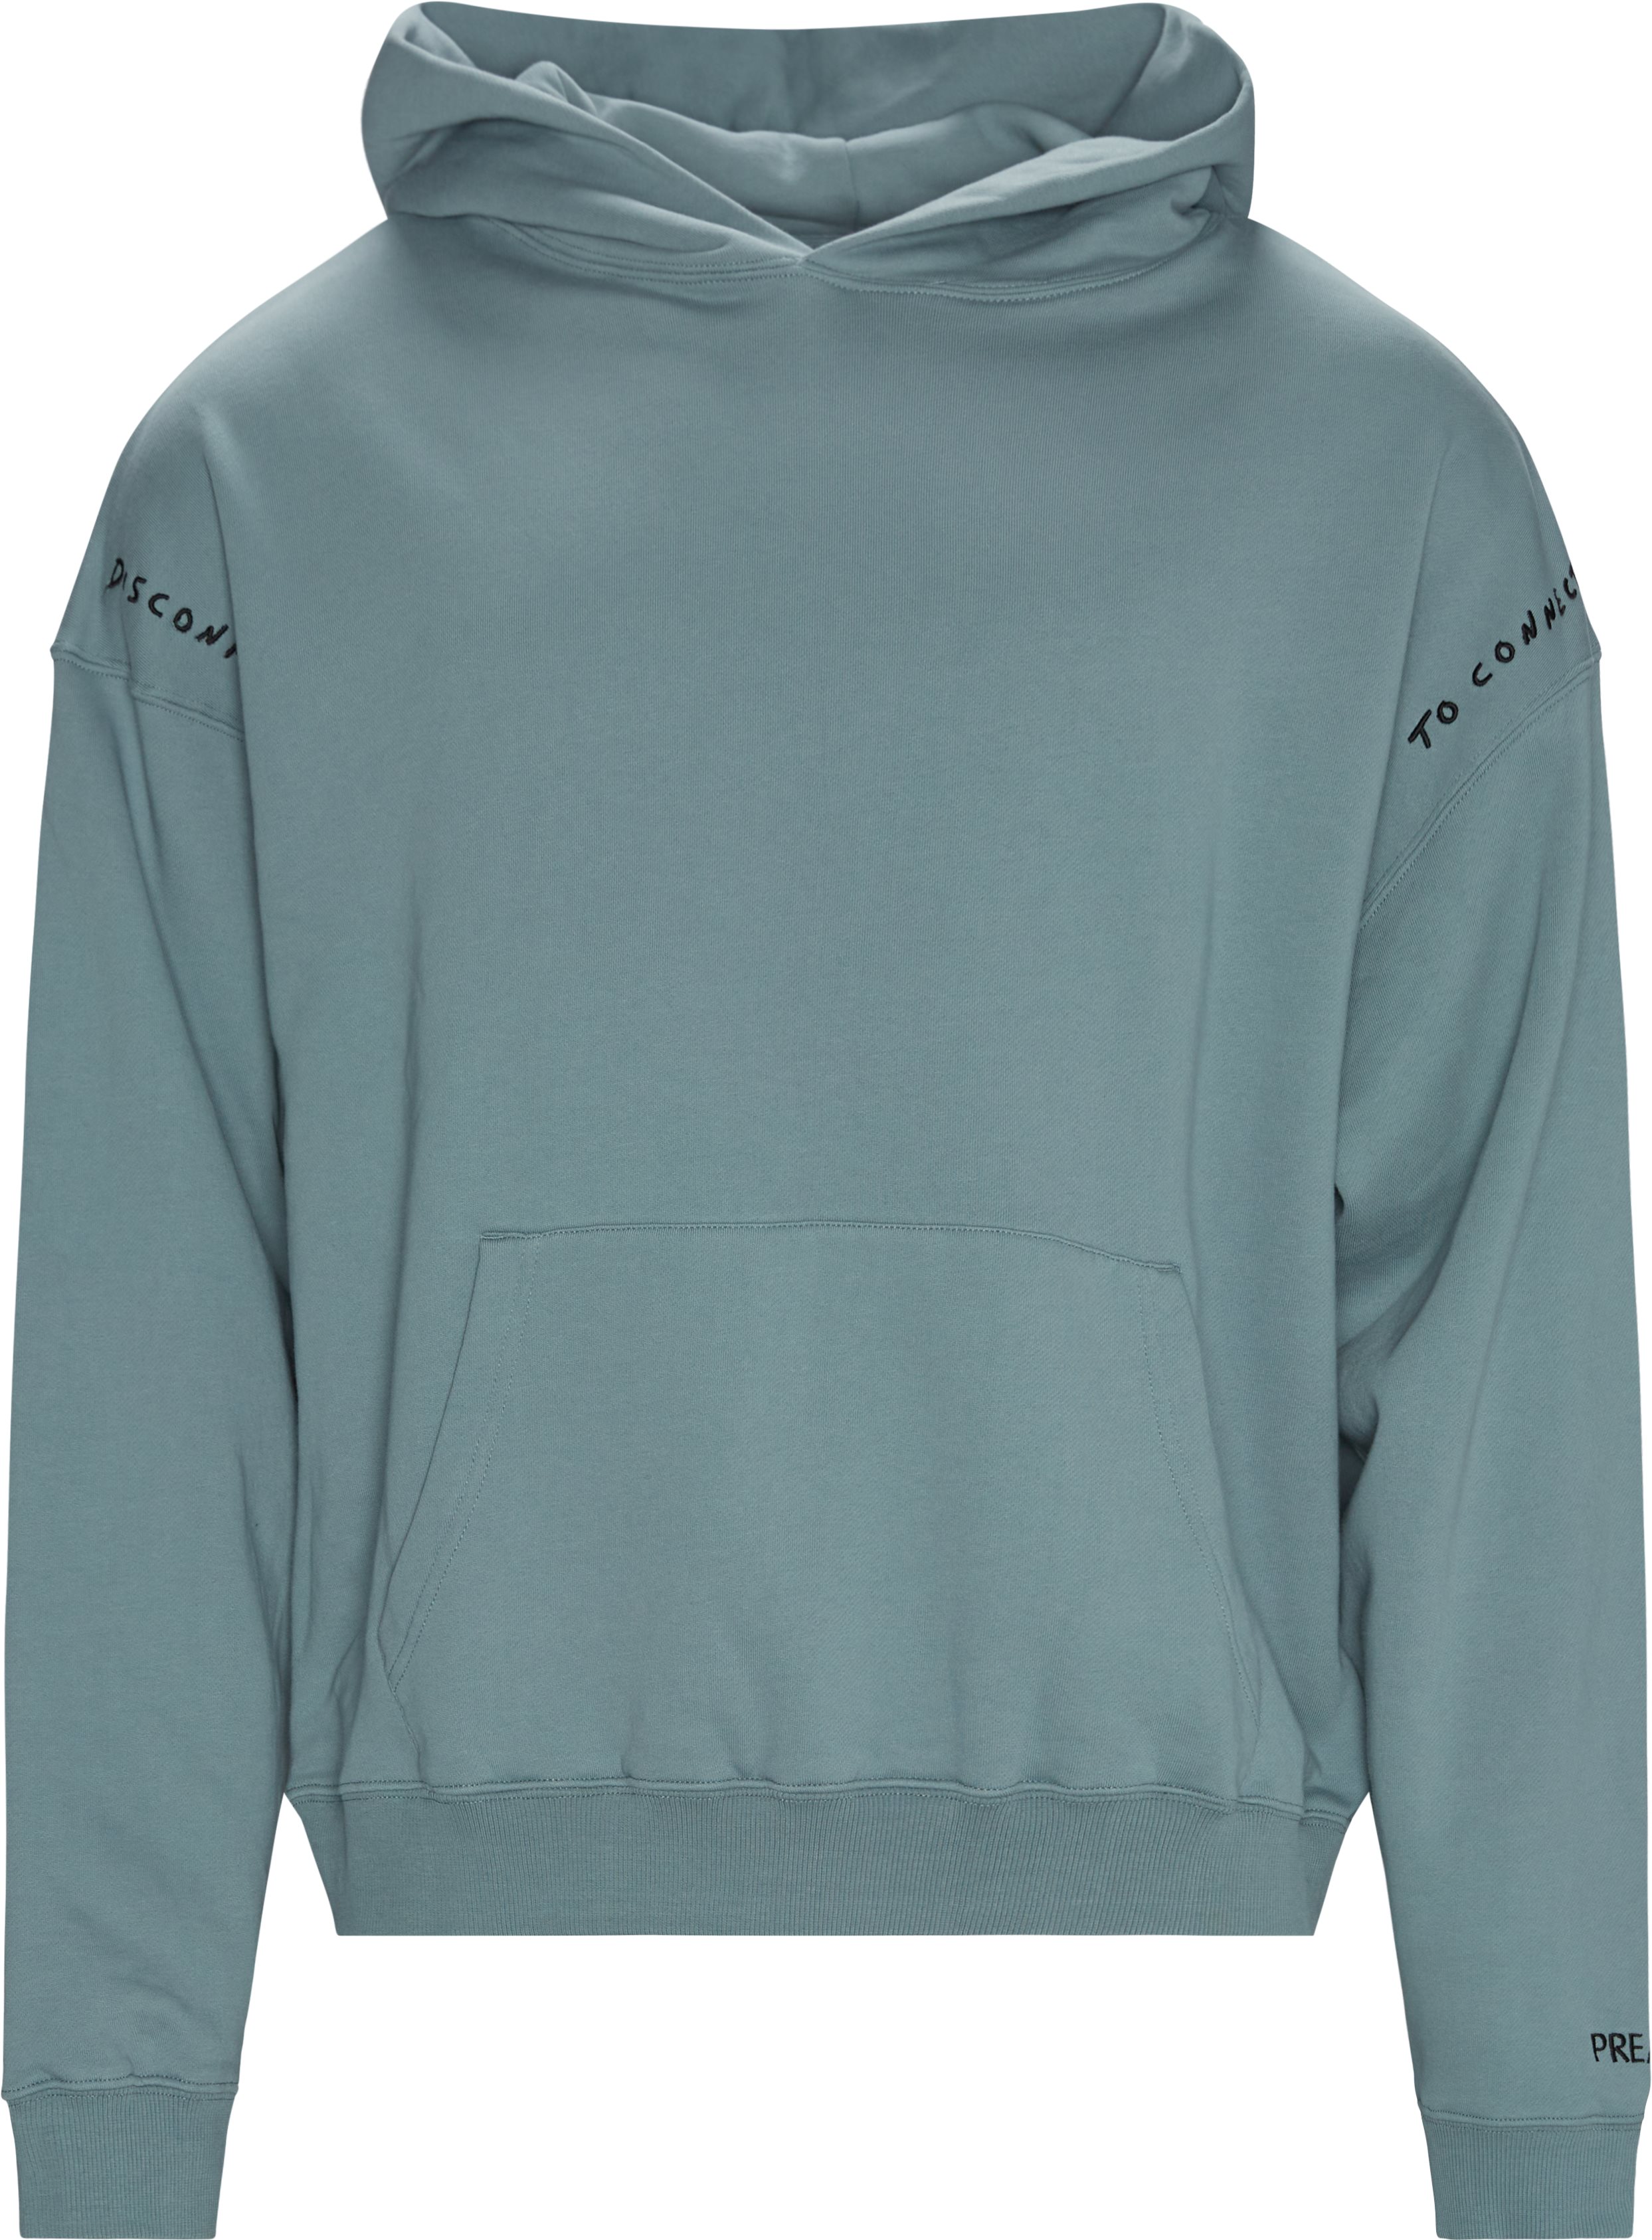 Bad Bank Hoodie - Sweatshirts - Oversize fit - Blå